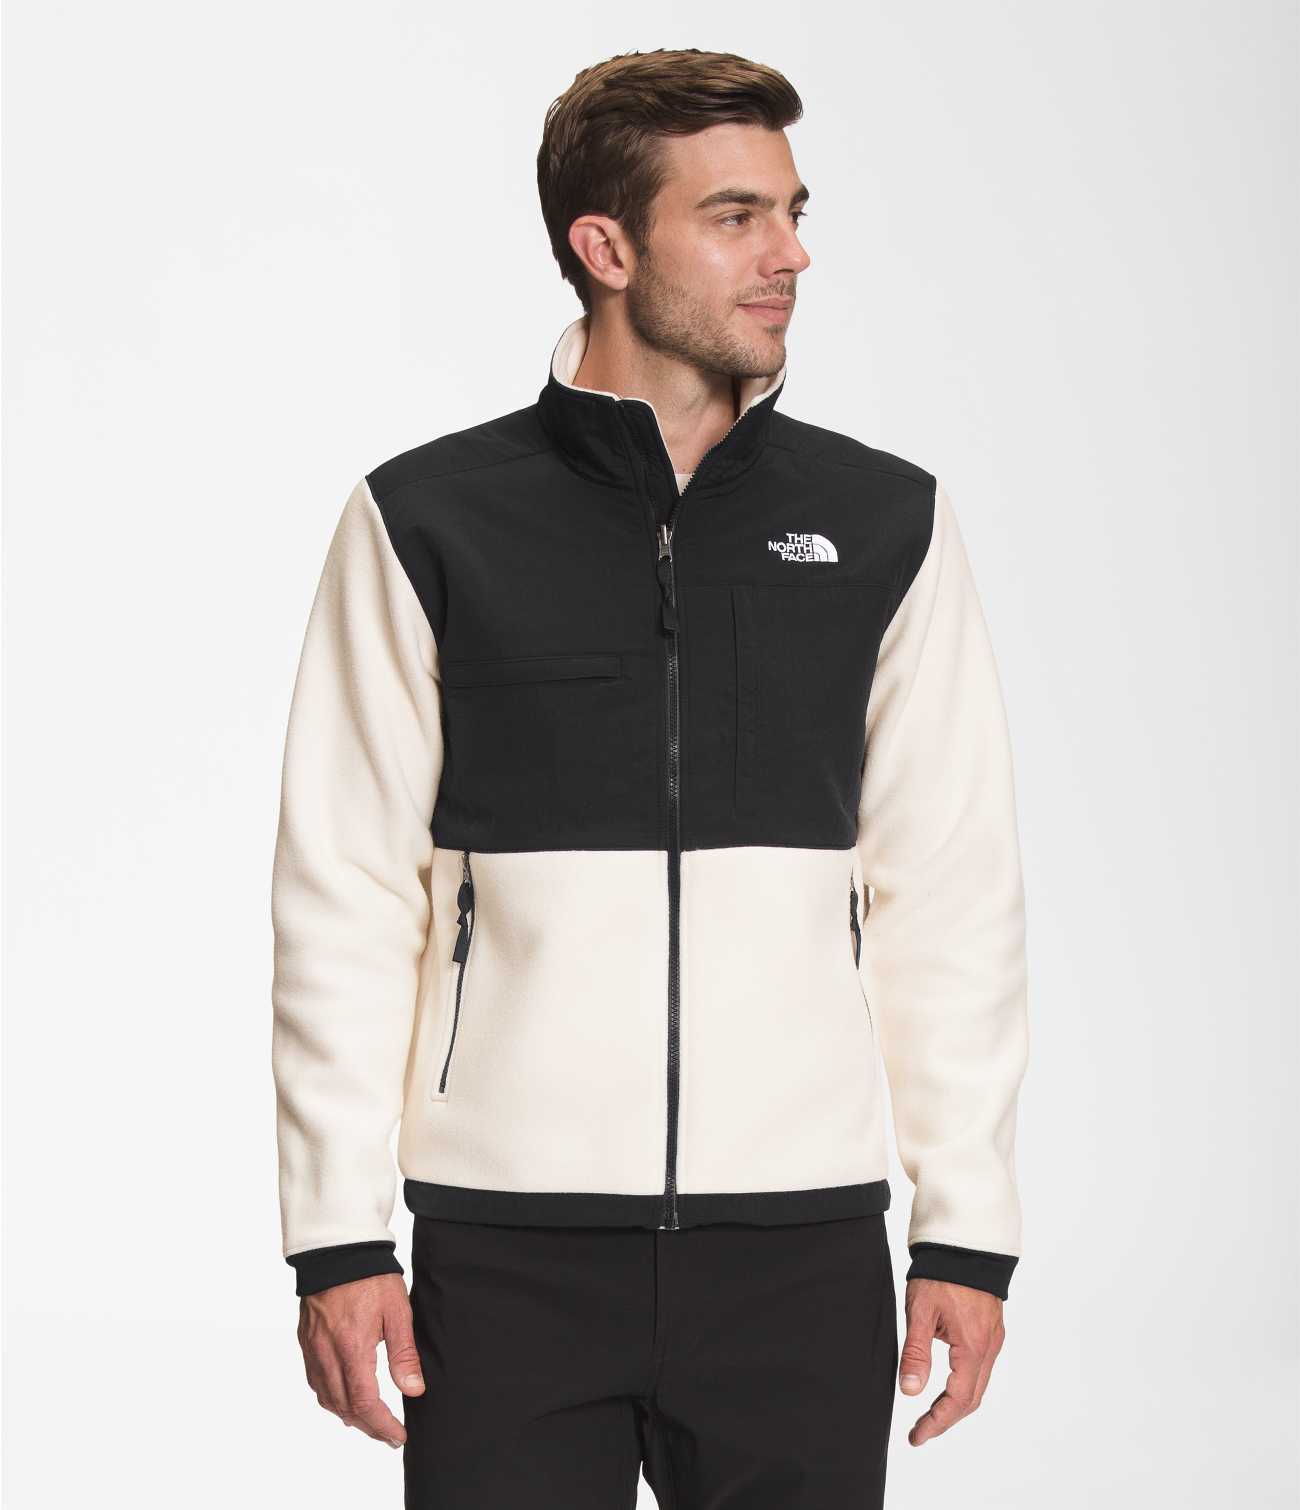 The North Face M's Denali Fleece Jacket